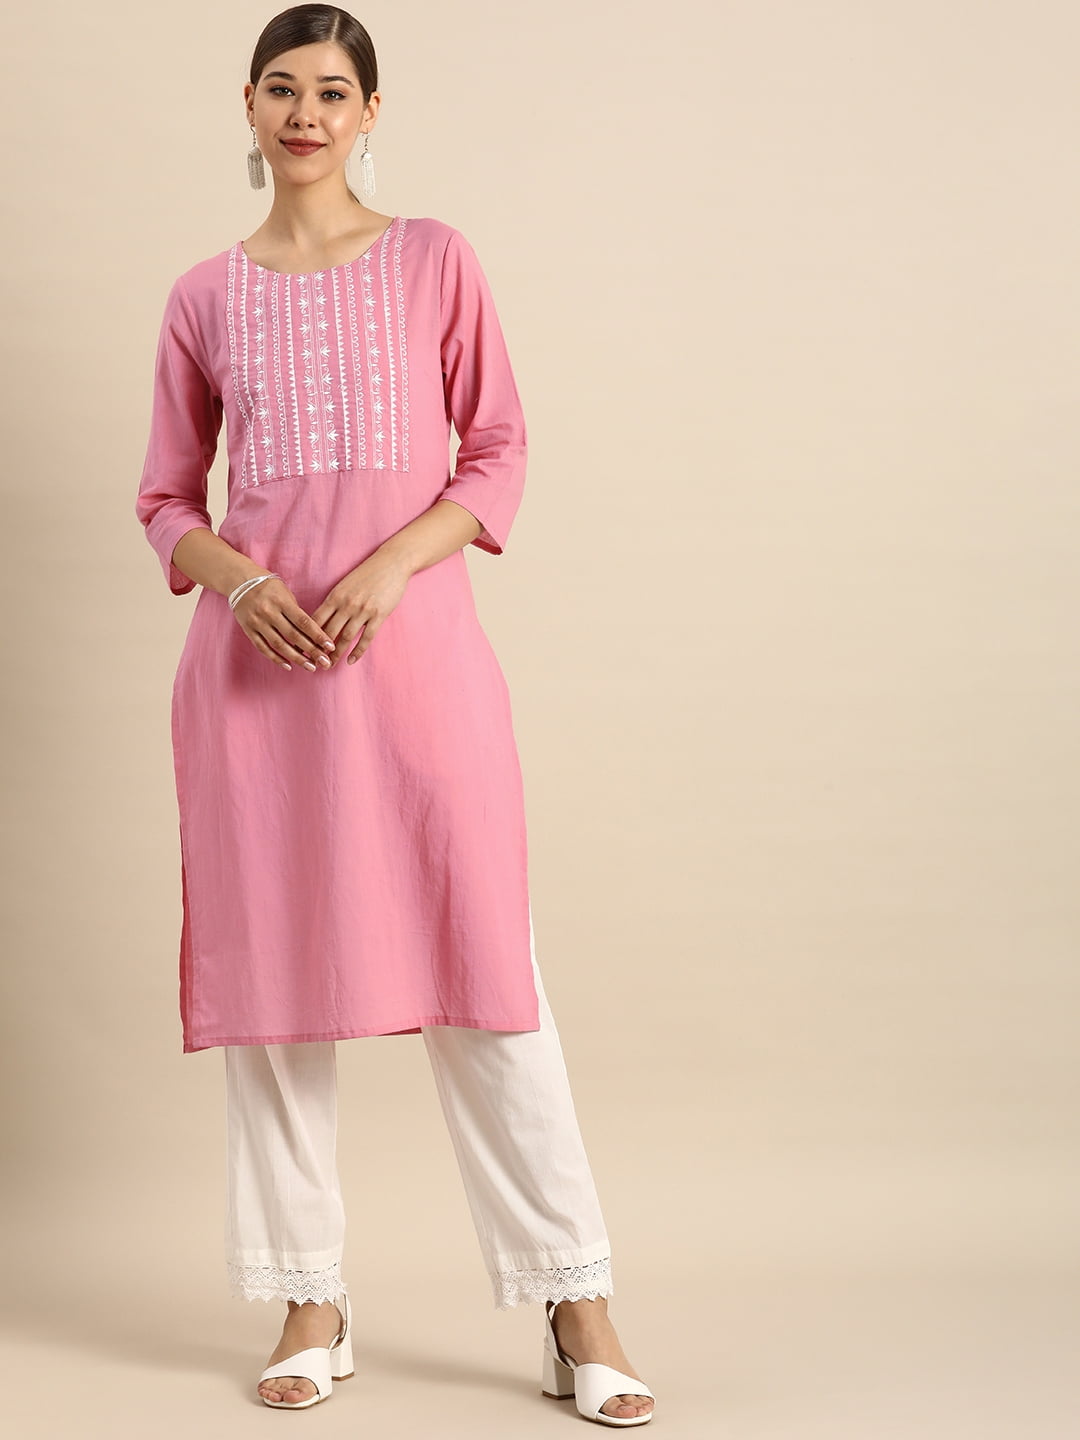 Fuchsia Party Dress - Buy Fuchsia Party Dress online in India